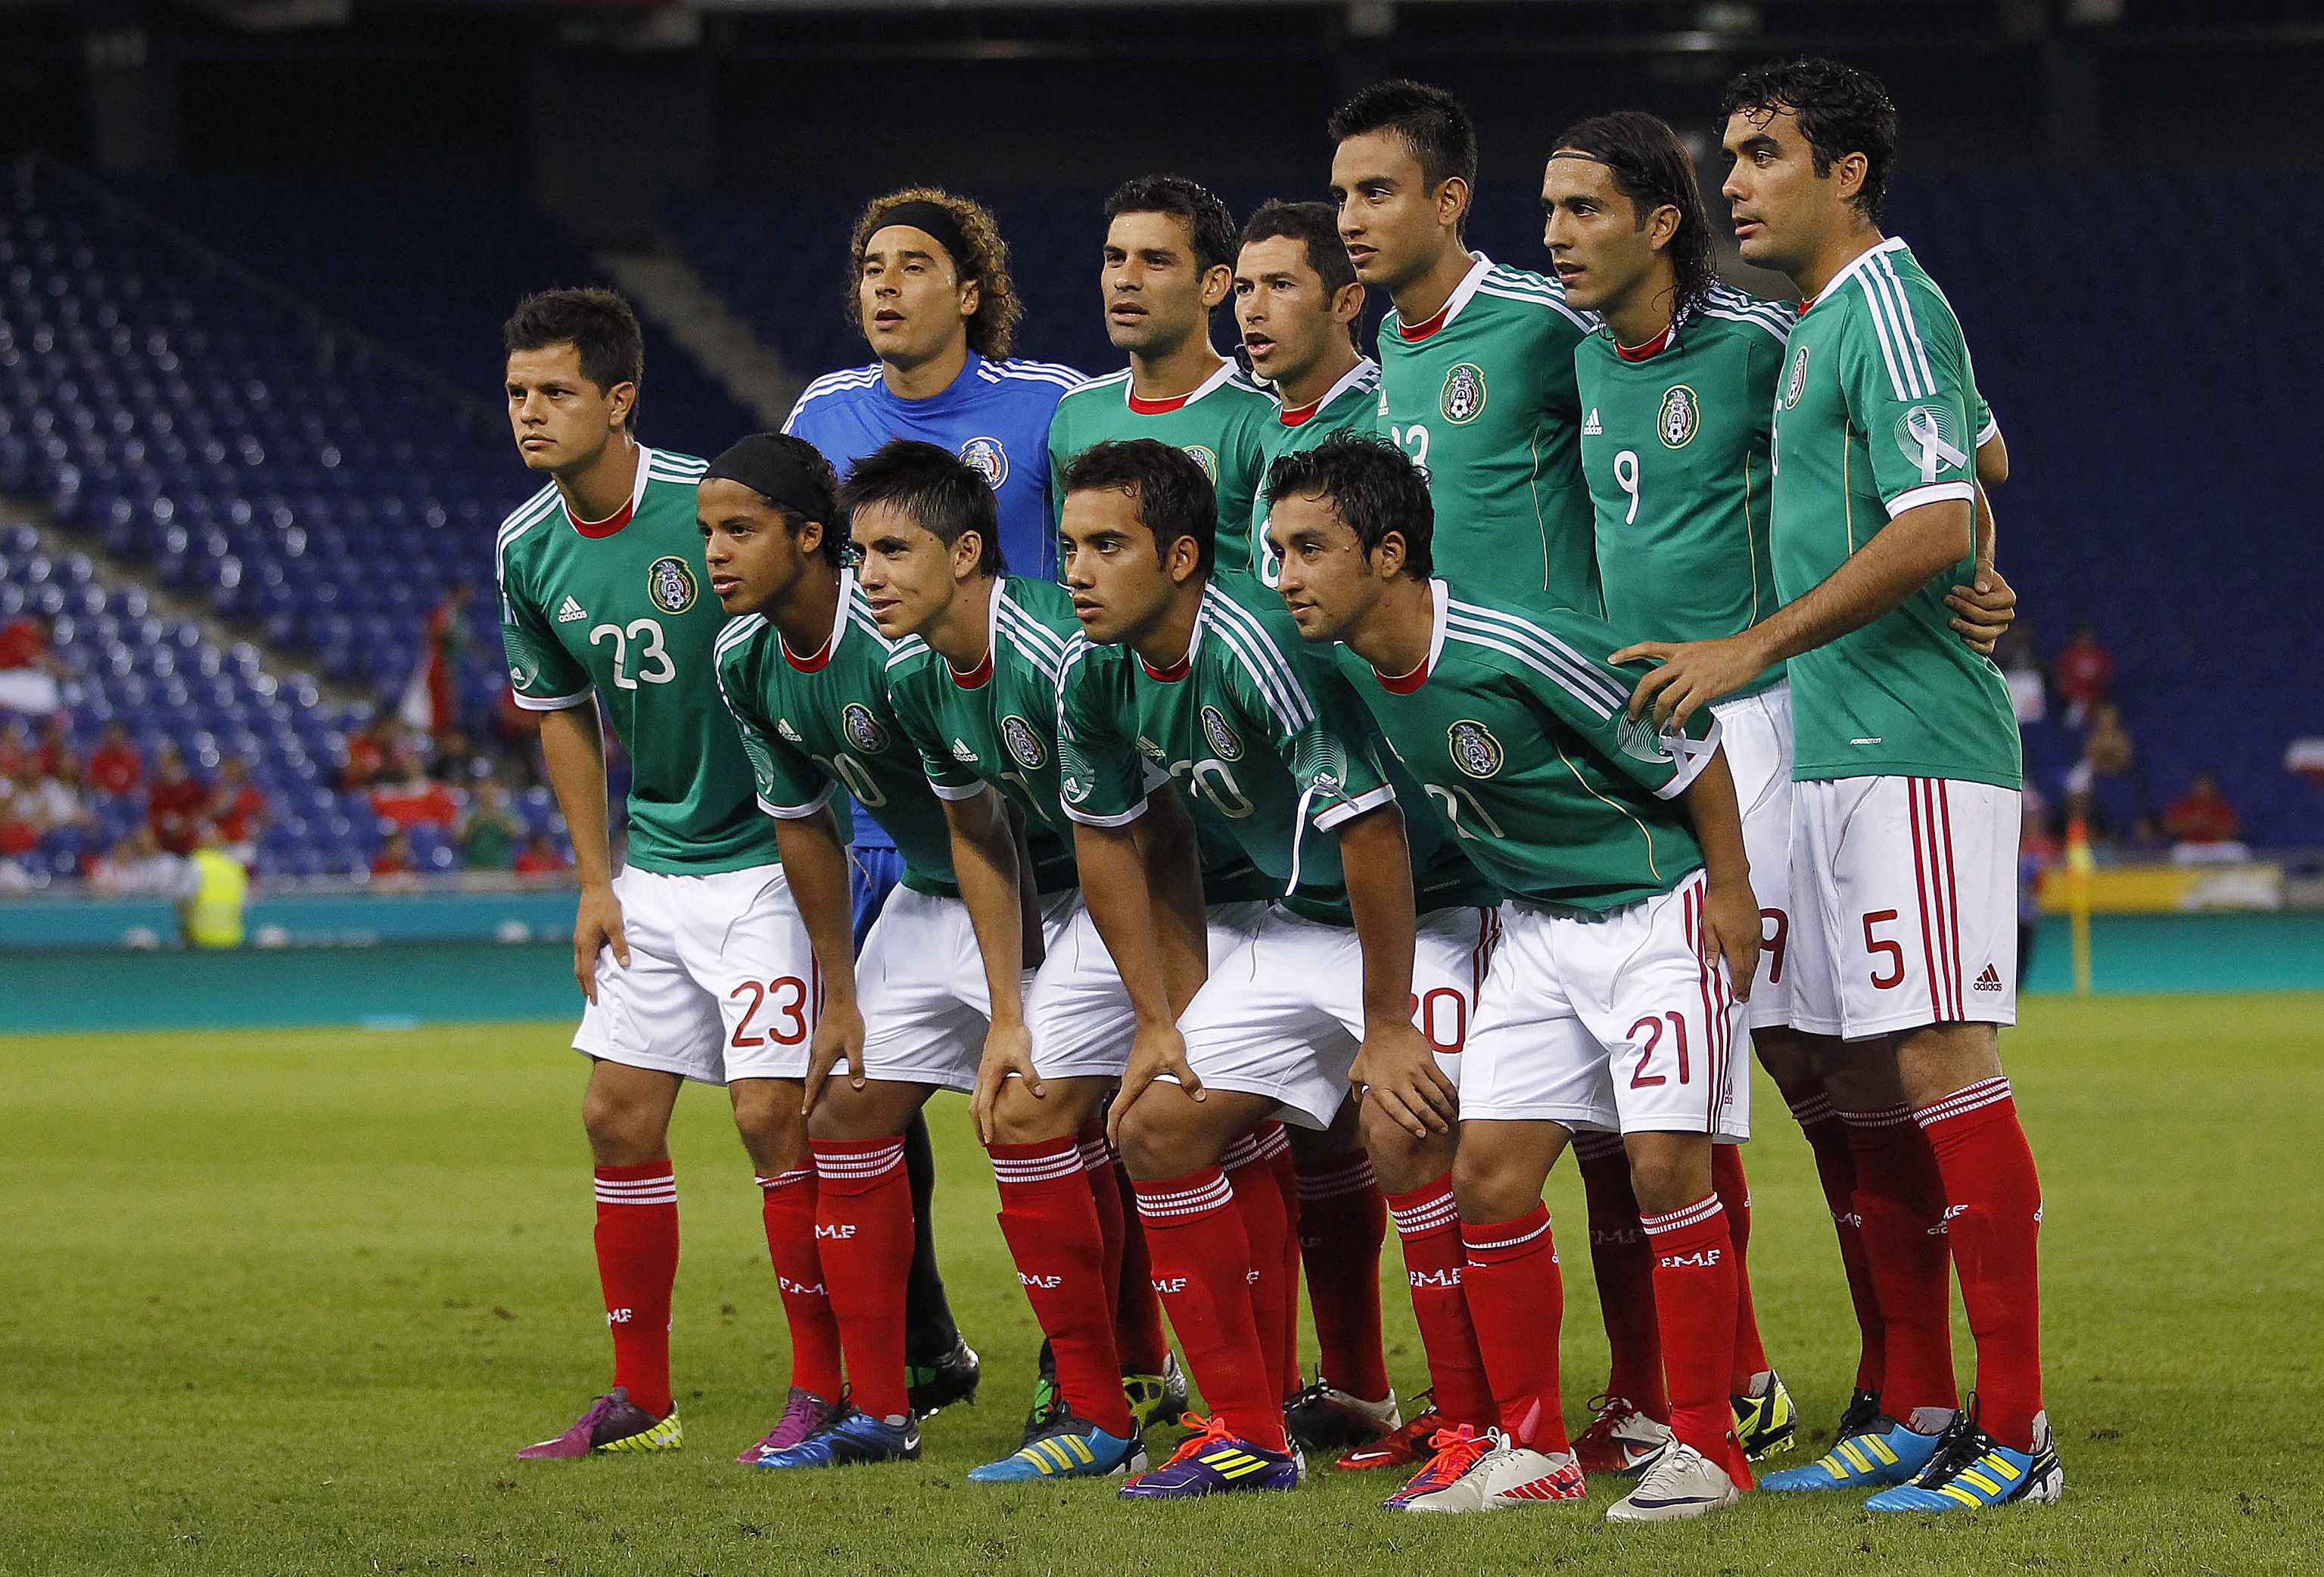 Download wallpaper 3071x2084 mexico vs chile, football, mexico